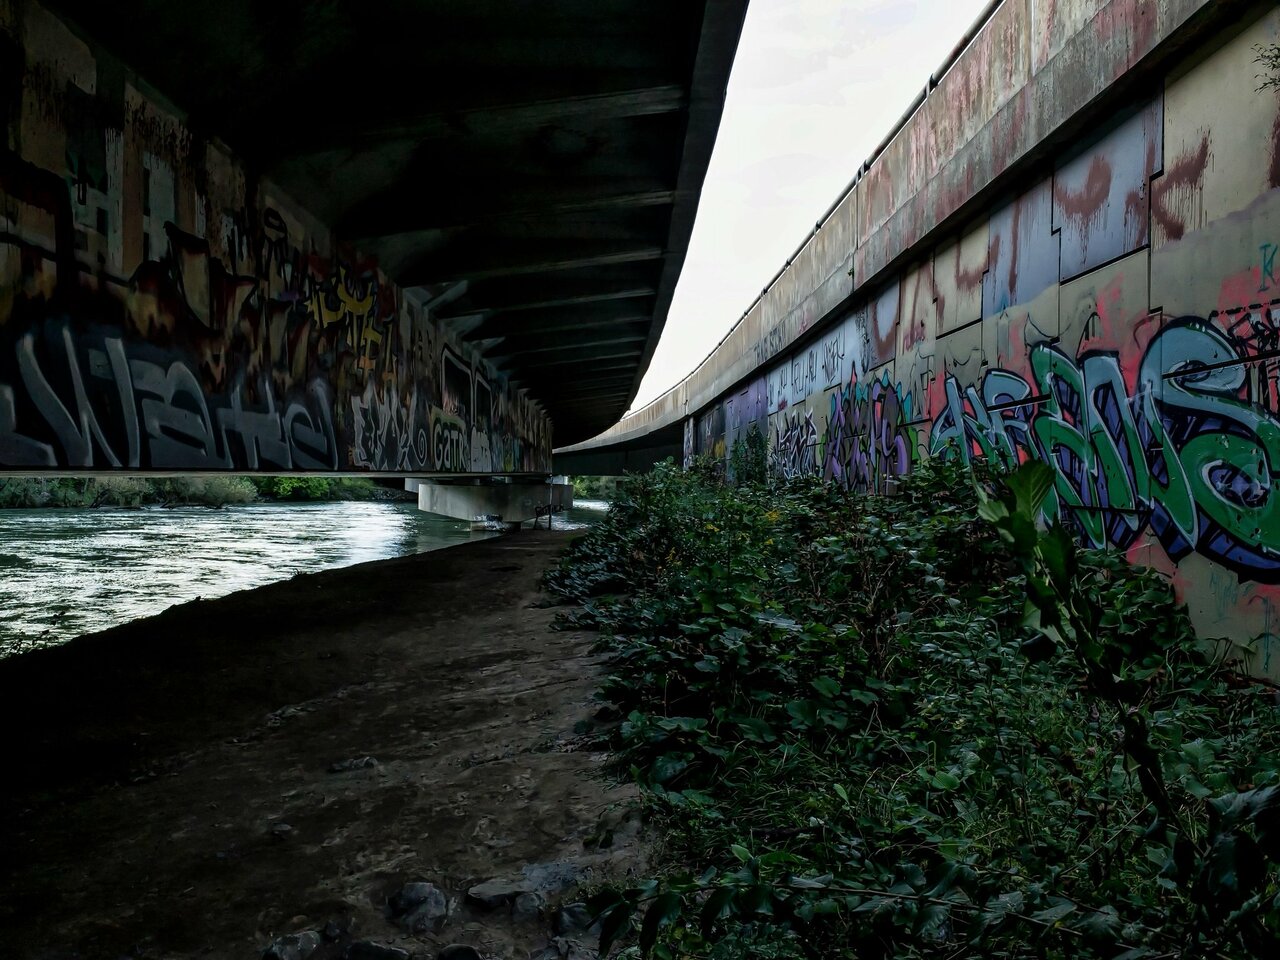 RT @TheresaGroth: Under The Bridge @Visit_Niagara #graffiti #Streetart #streetphotography #City #UnderPass @PENTAXIAN #RicohGR http://t.co/nw9Uv9ZULu